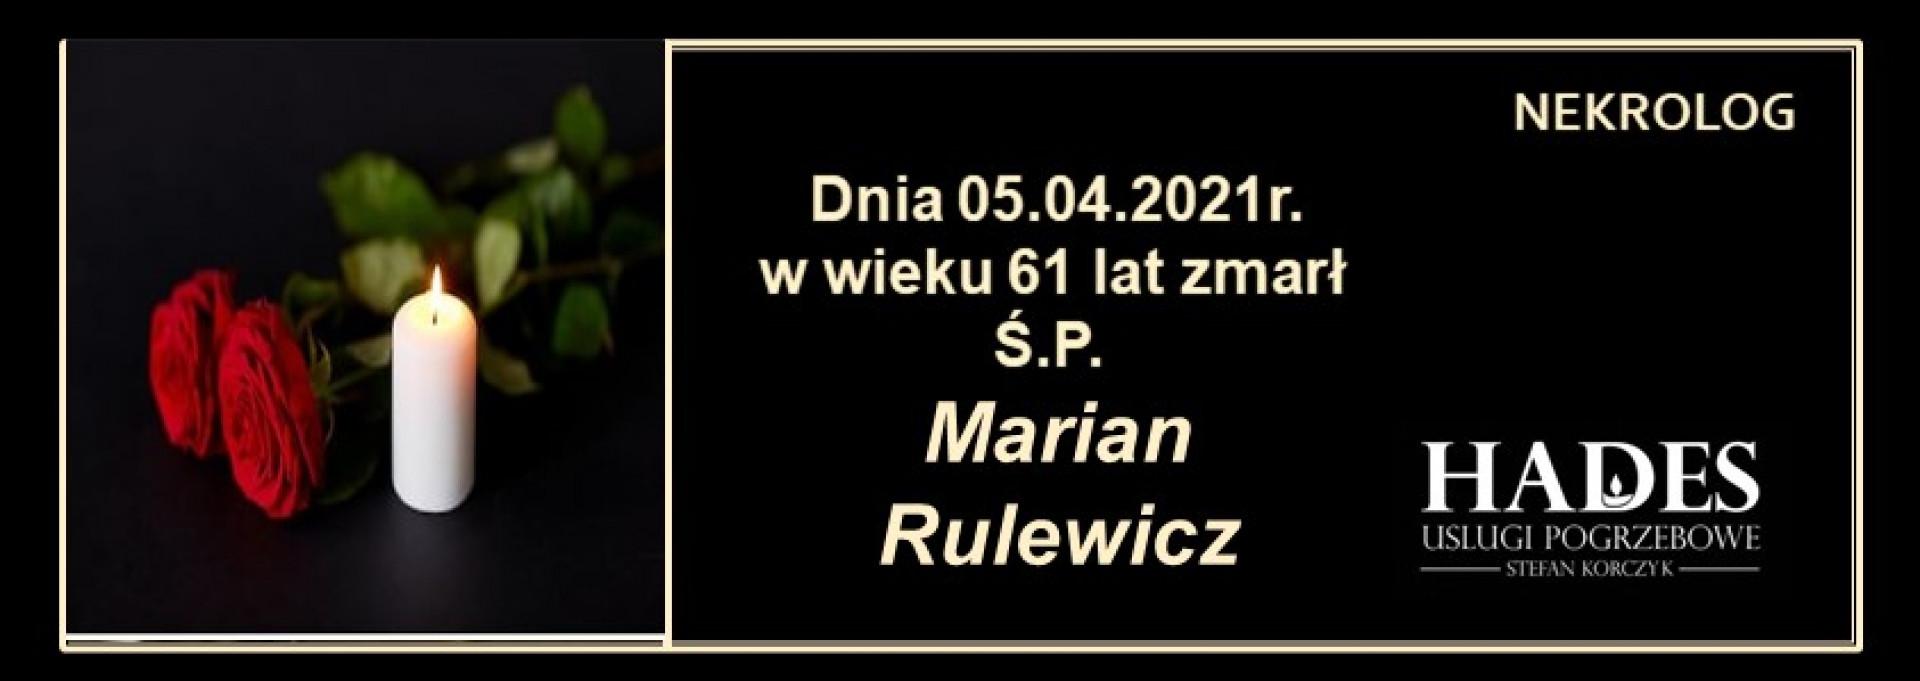 Ś.P. Marian Rulewicz